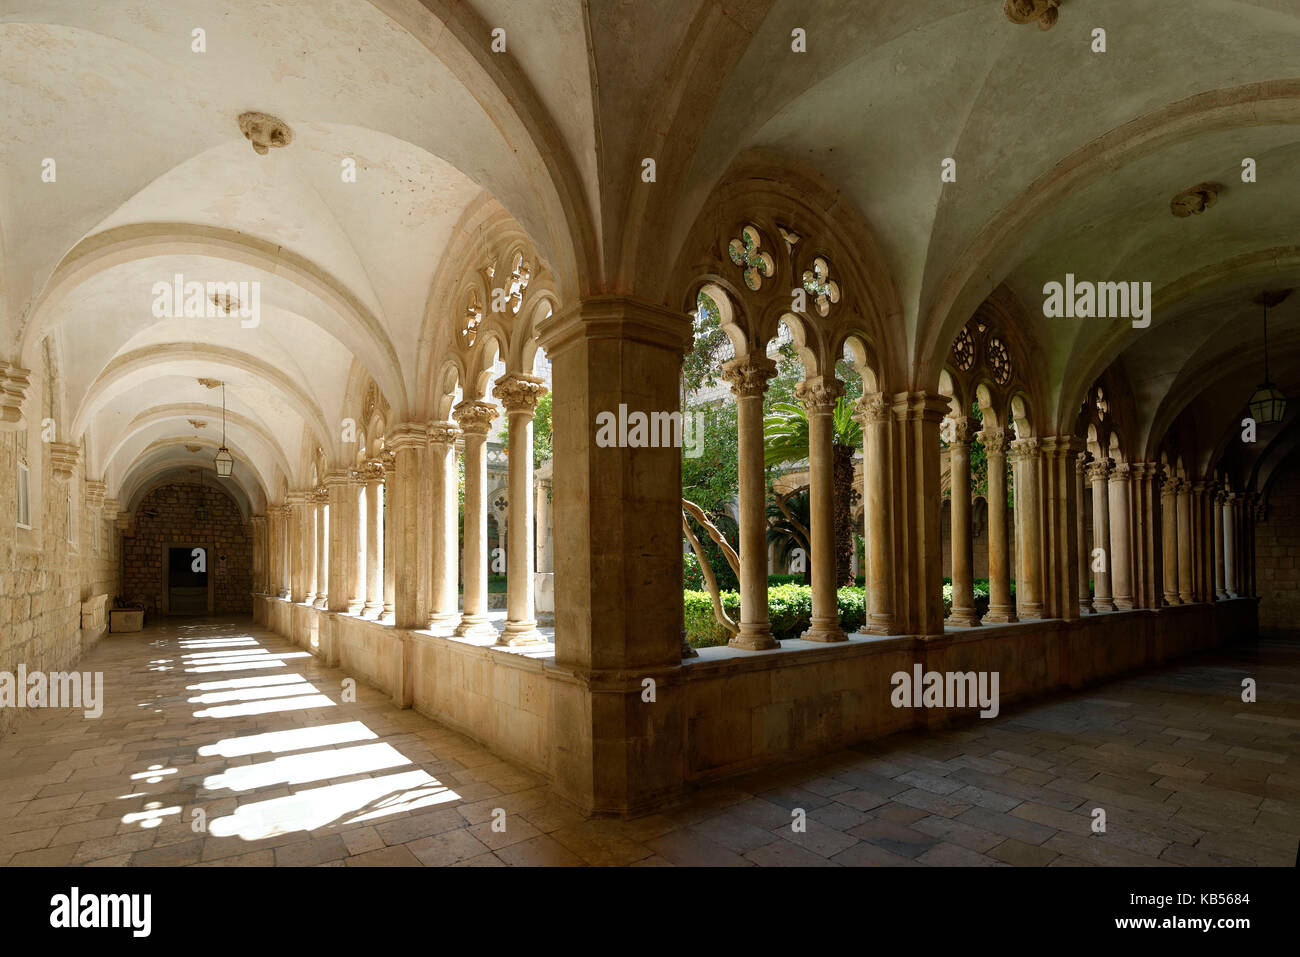 Croatia, Dalmatia, Dalmatian coast, Dubrovnik historical centre, listed as World Heritage by UNESCO, cloister of the Dominican Monastery Stock Photo